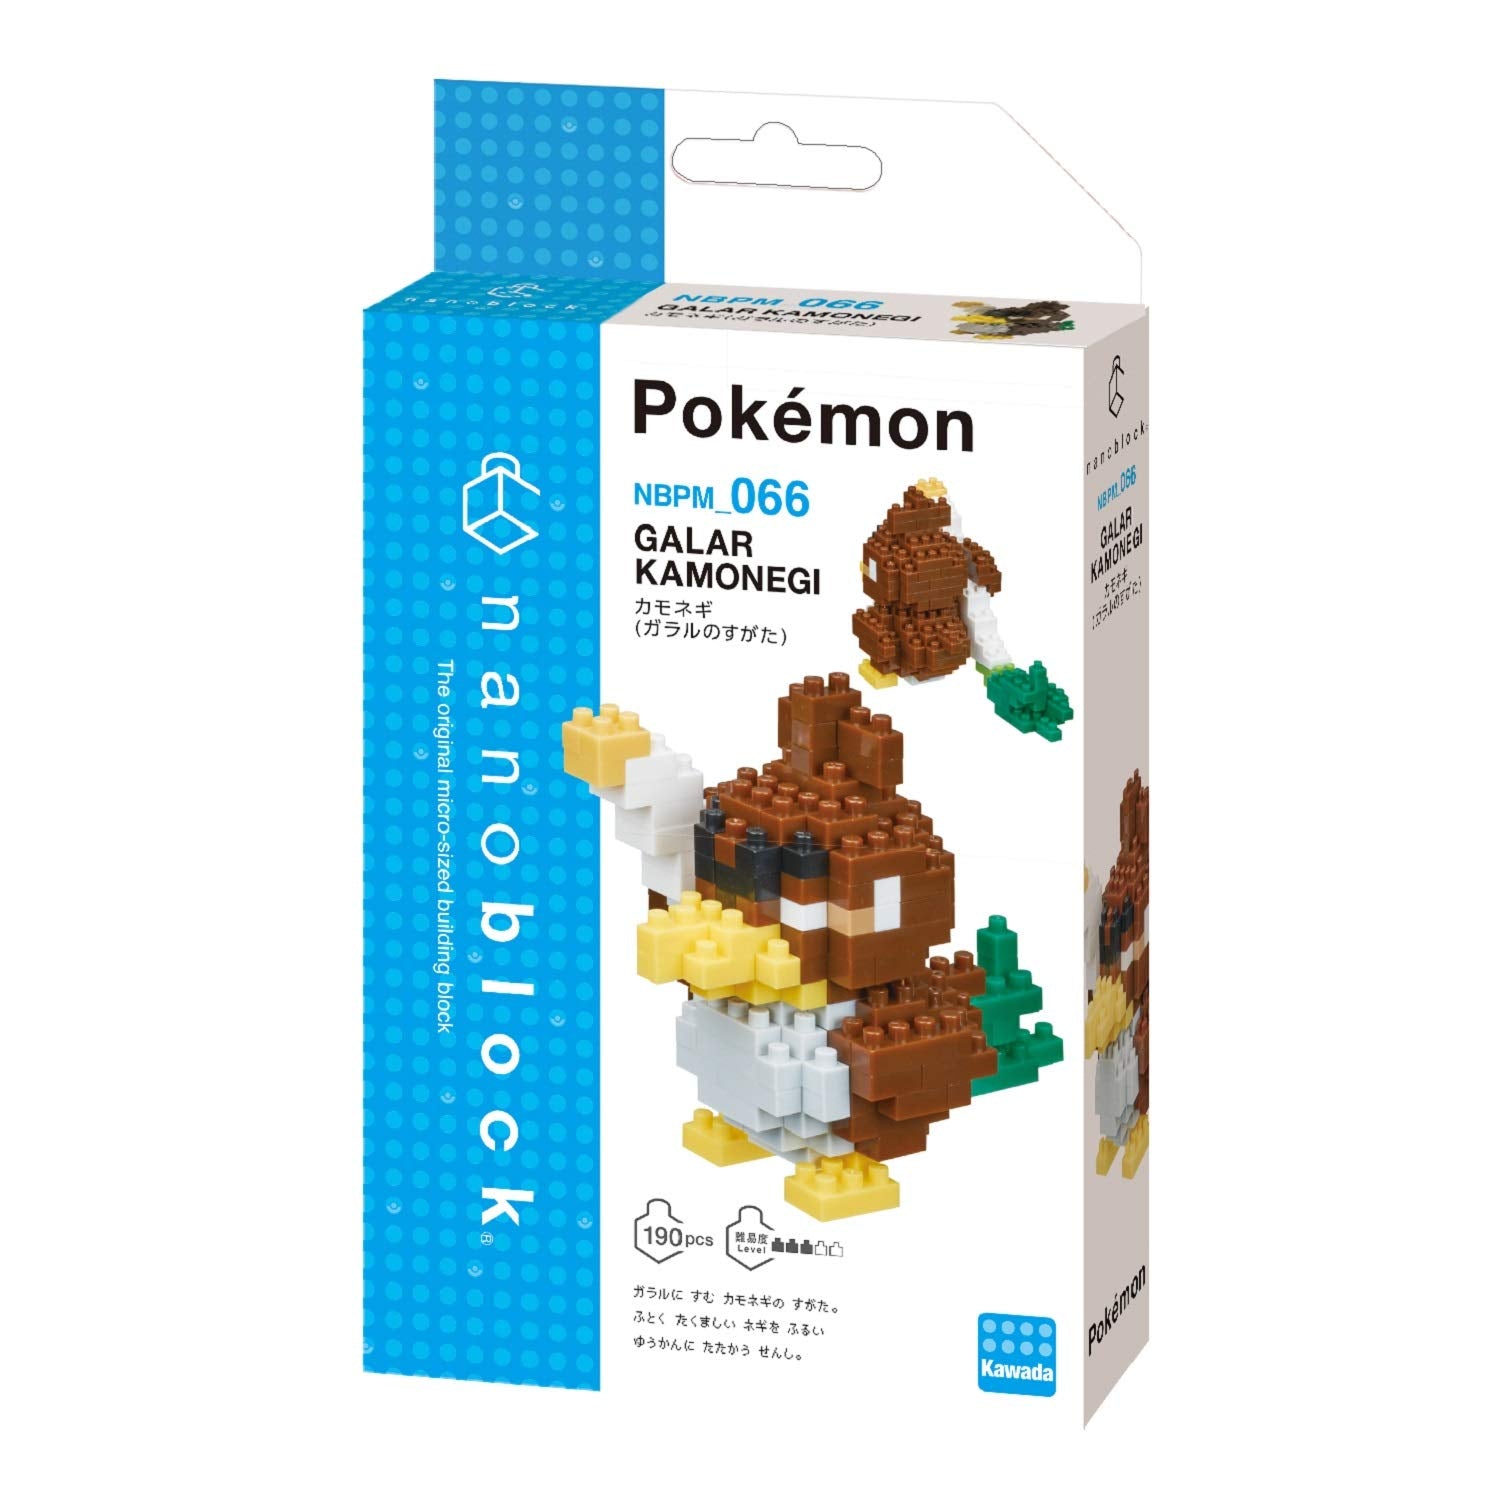 Nanoblock - Pokemon - Galarian Farfetch'd, Nanoblock Pokemon Series Building Kit